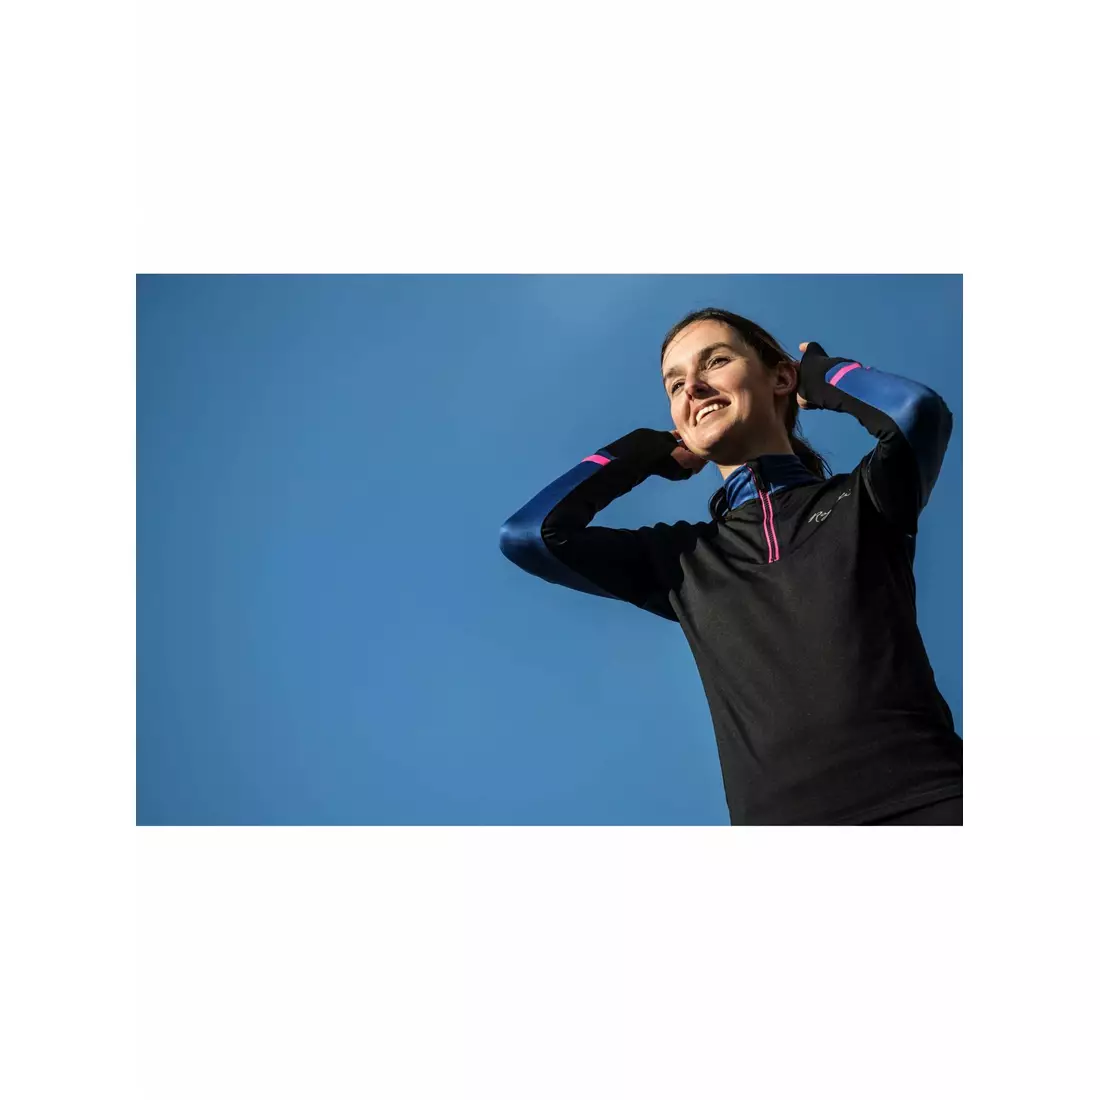 Rogelli COSMIC women's running shirt long sleeve black-blue-pink 840.666